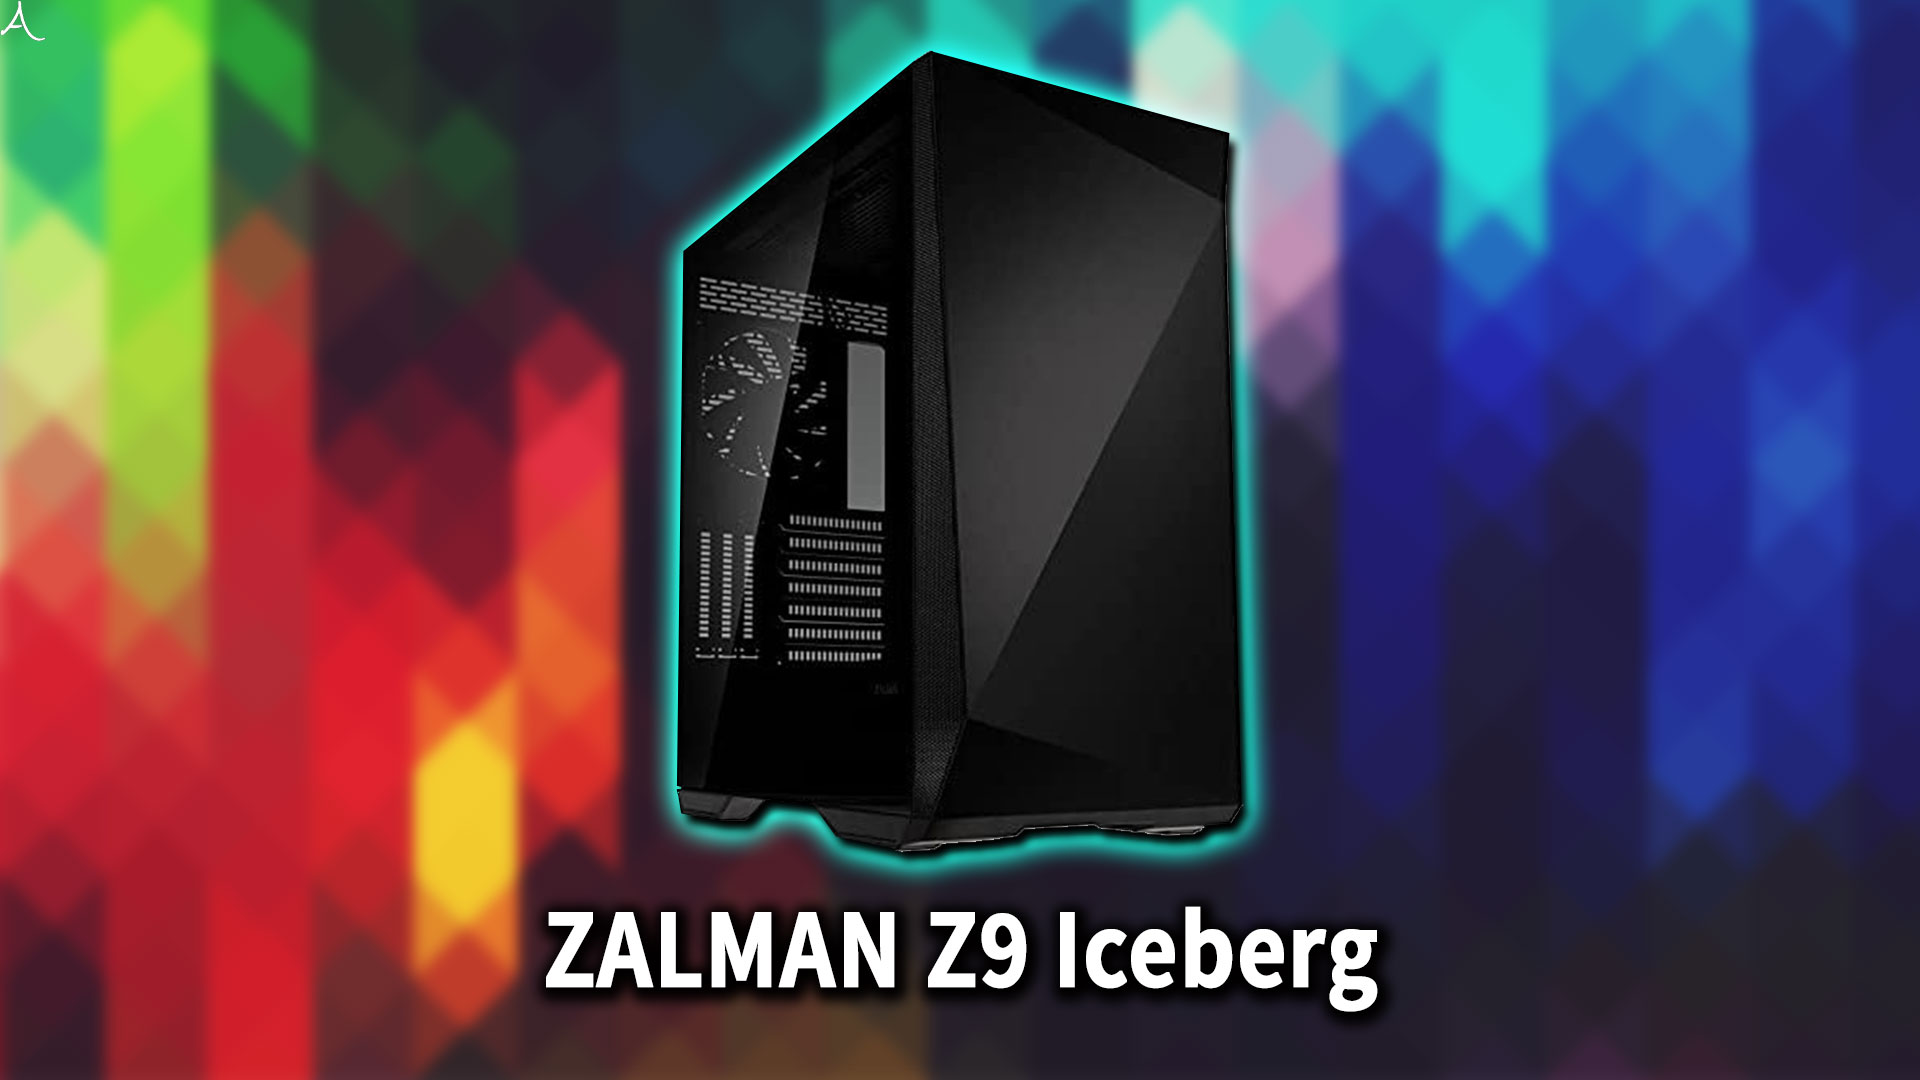 ｢ZALMAN Z9 Iceberg｣のサイズ・大きさはどれくらい？